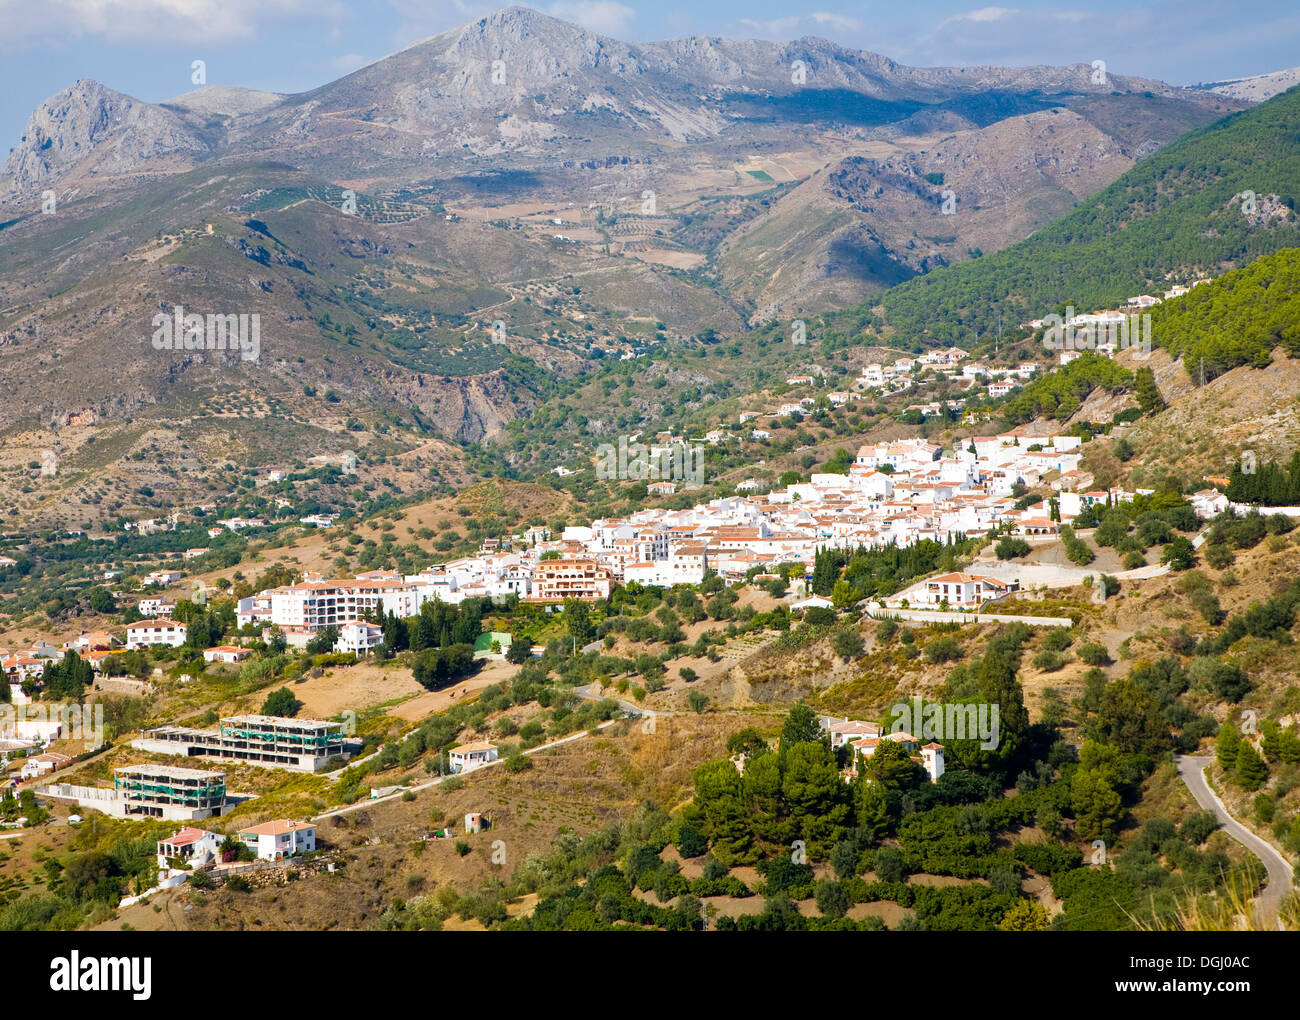 Pueblos Blancos white village of Alcaucin, Malaga province, Spain Stock Photo